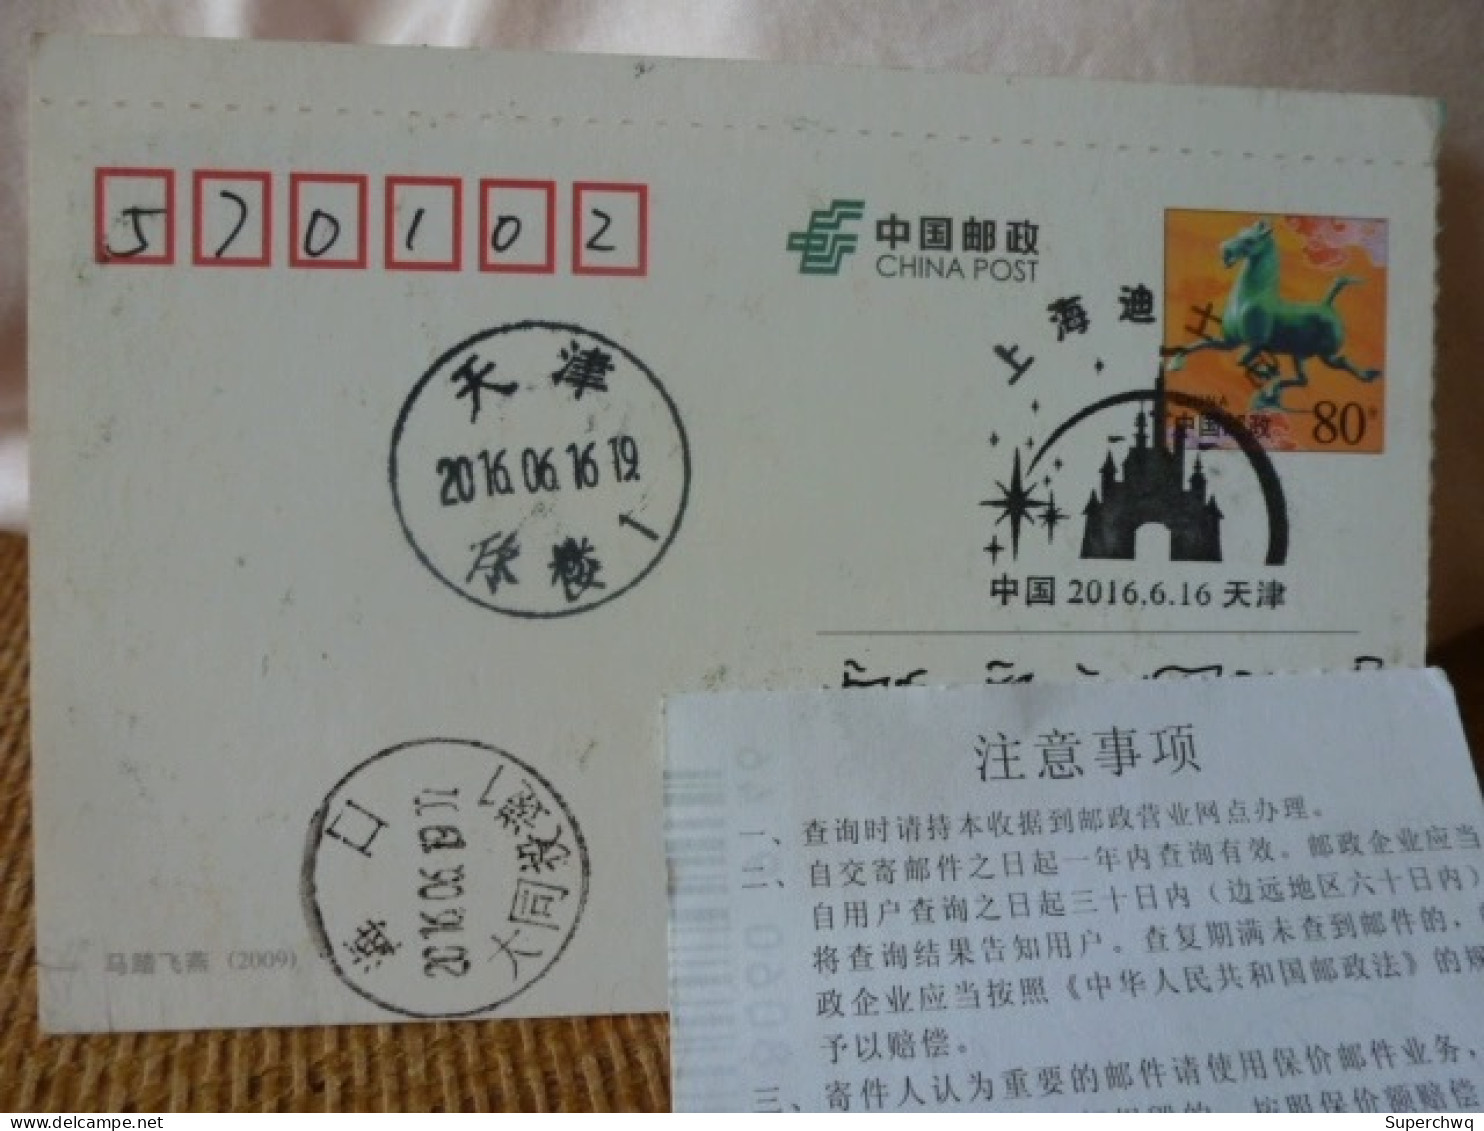 China Posted Postcard,with Shanghai Disney Postmark - Ansichtskarten